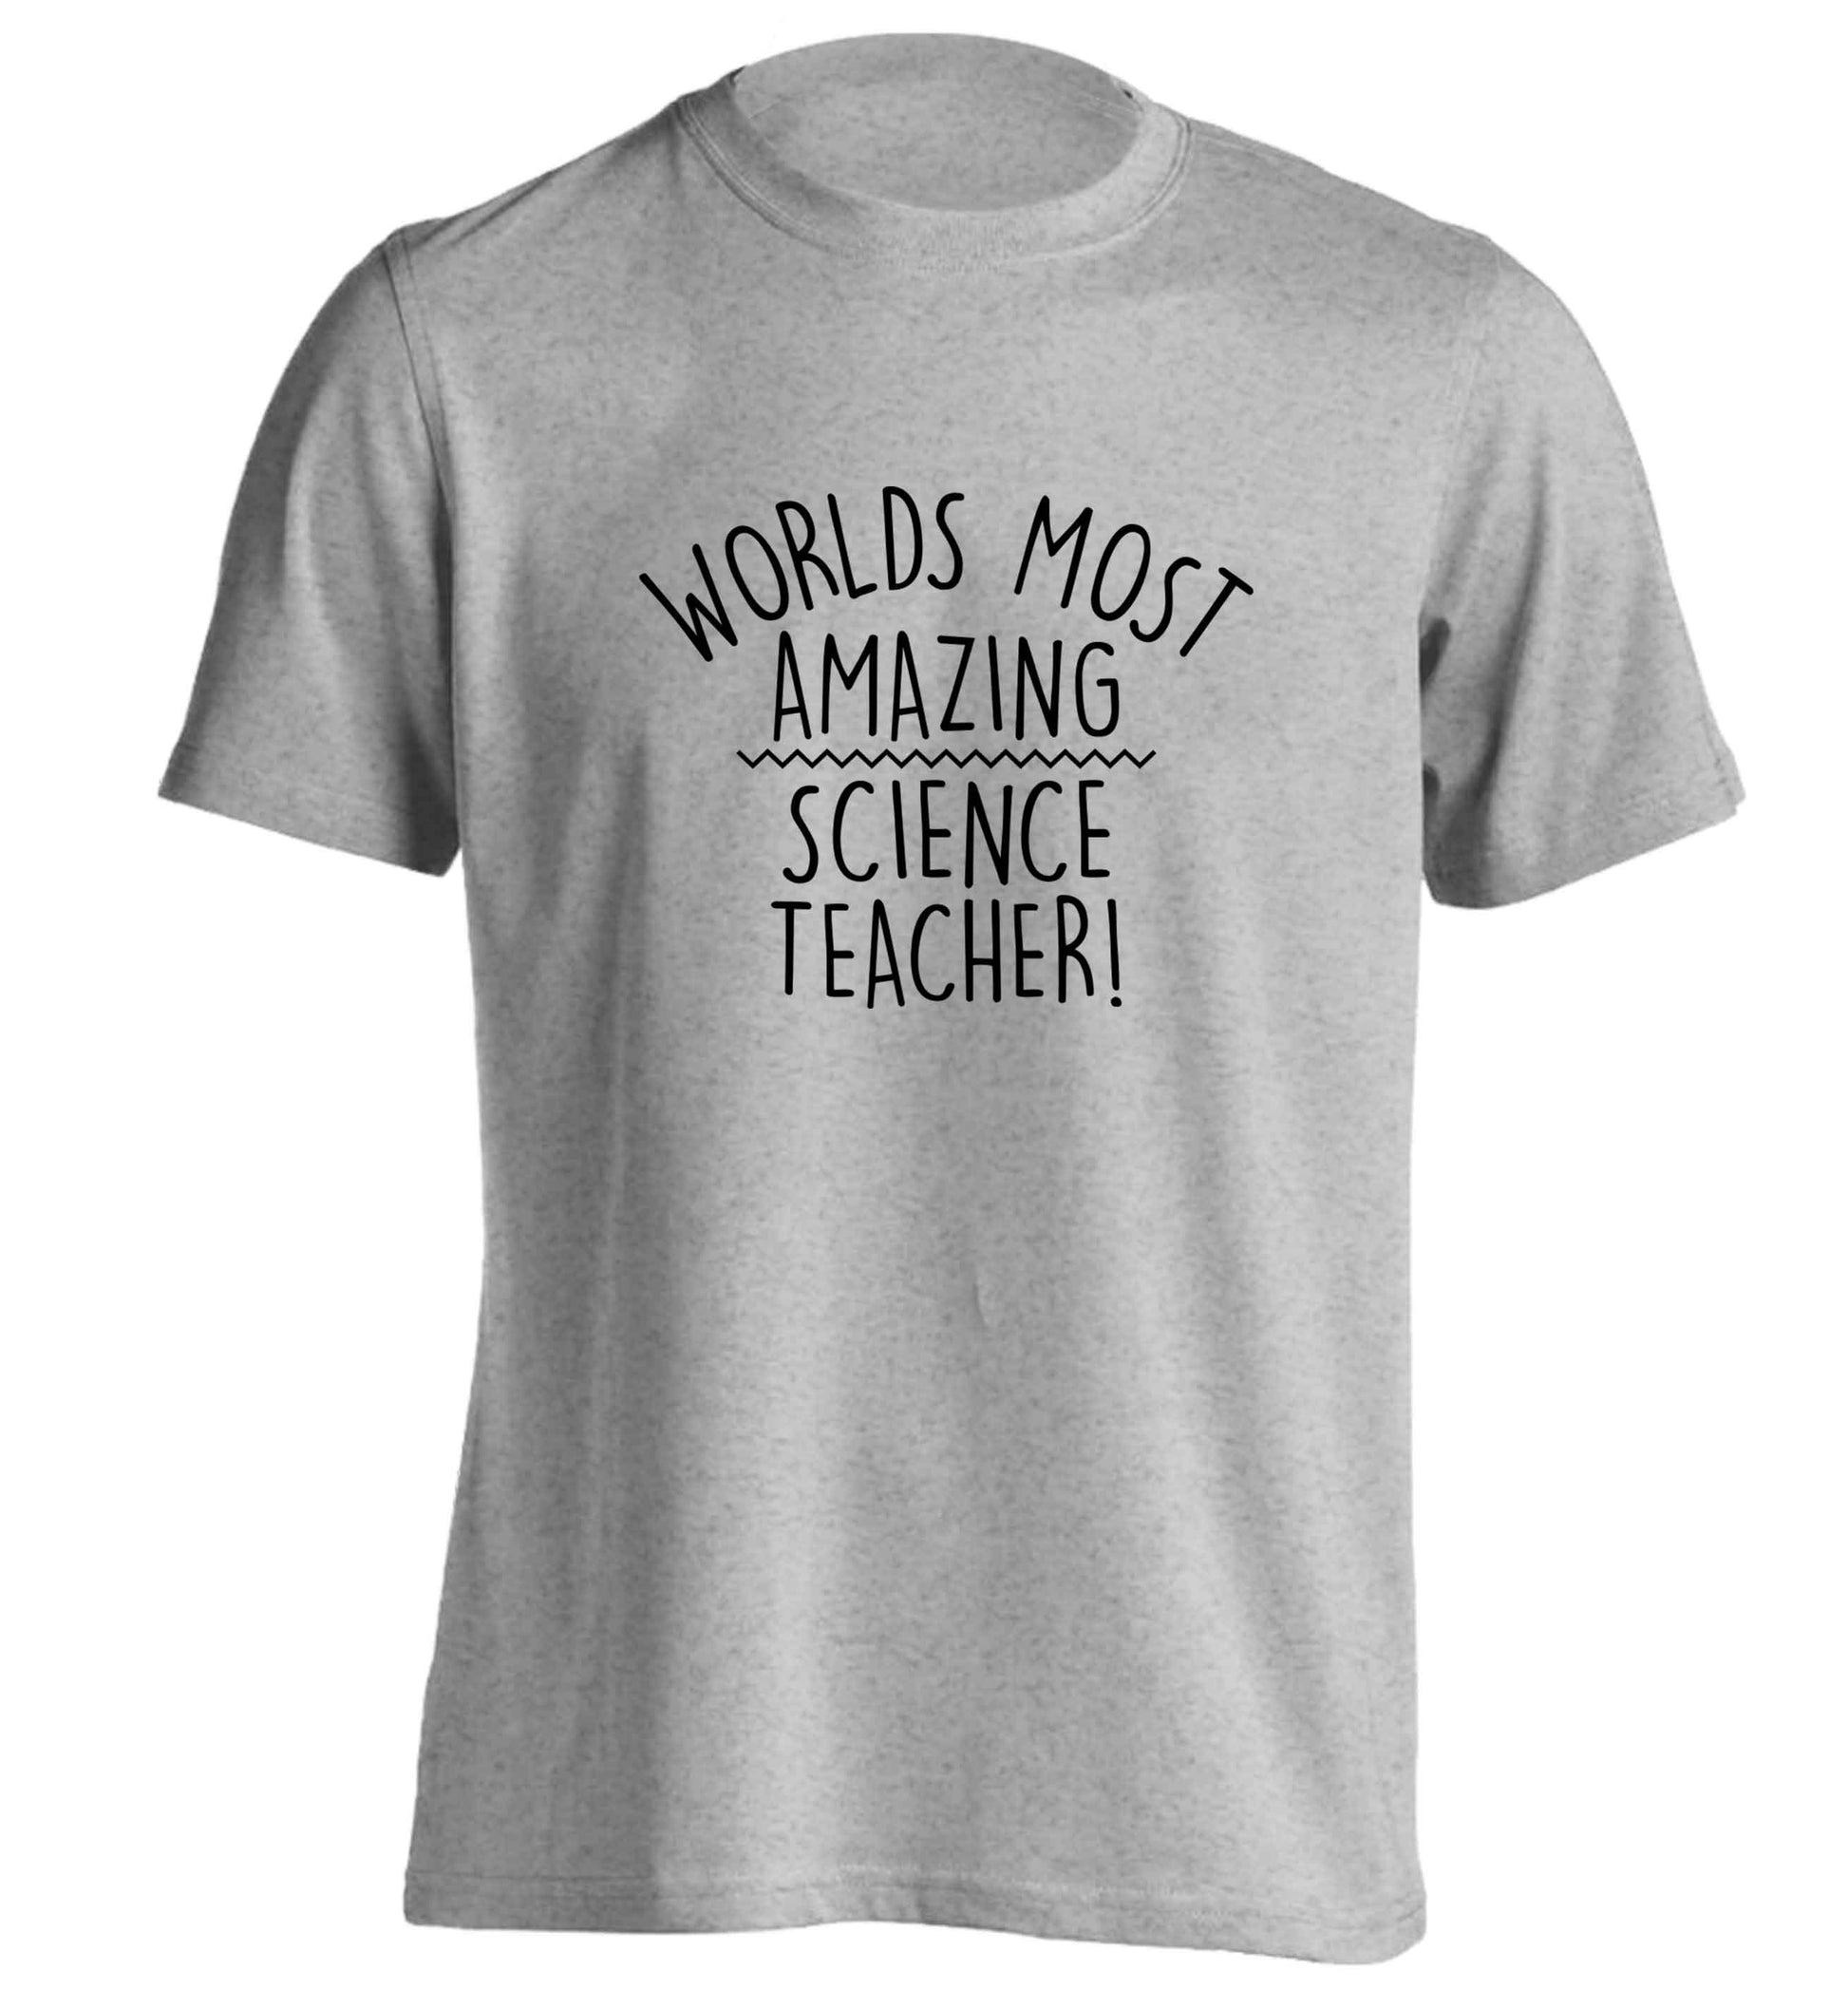 Worlds most amazing science teacher adults unisex grey Tshirt 2XL